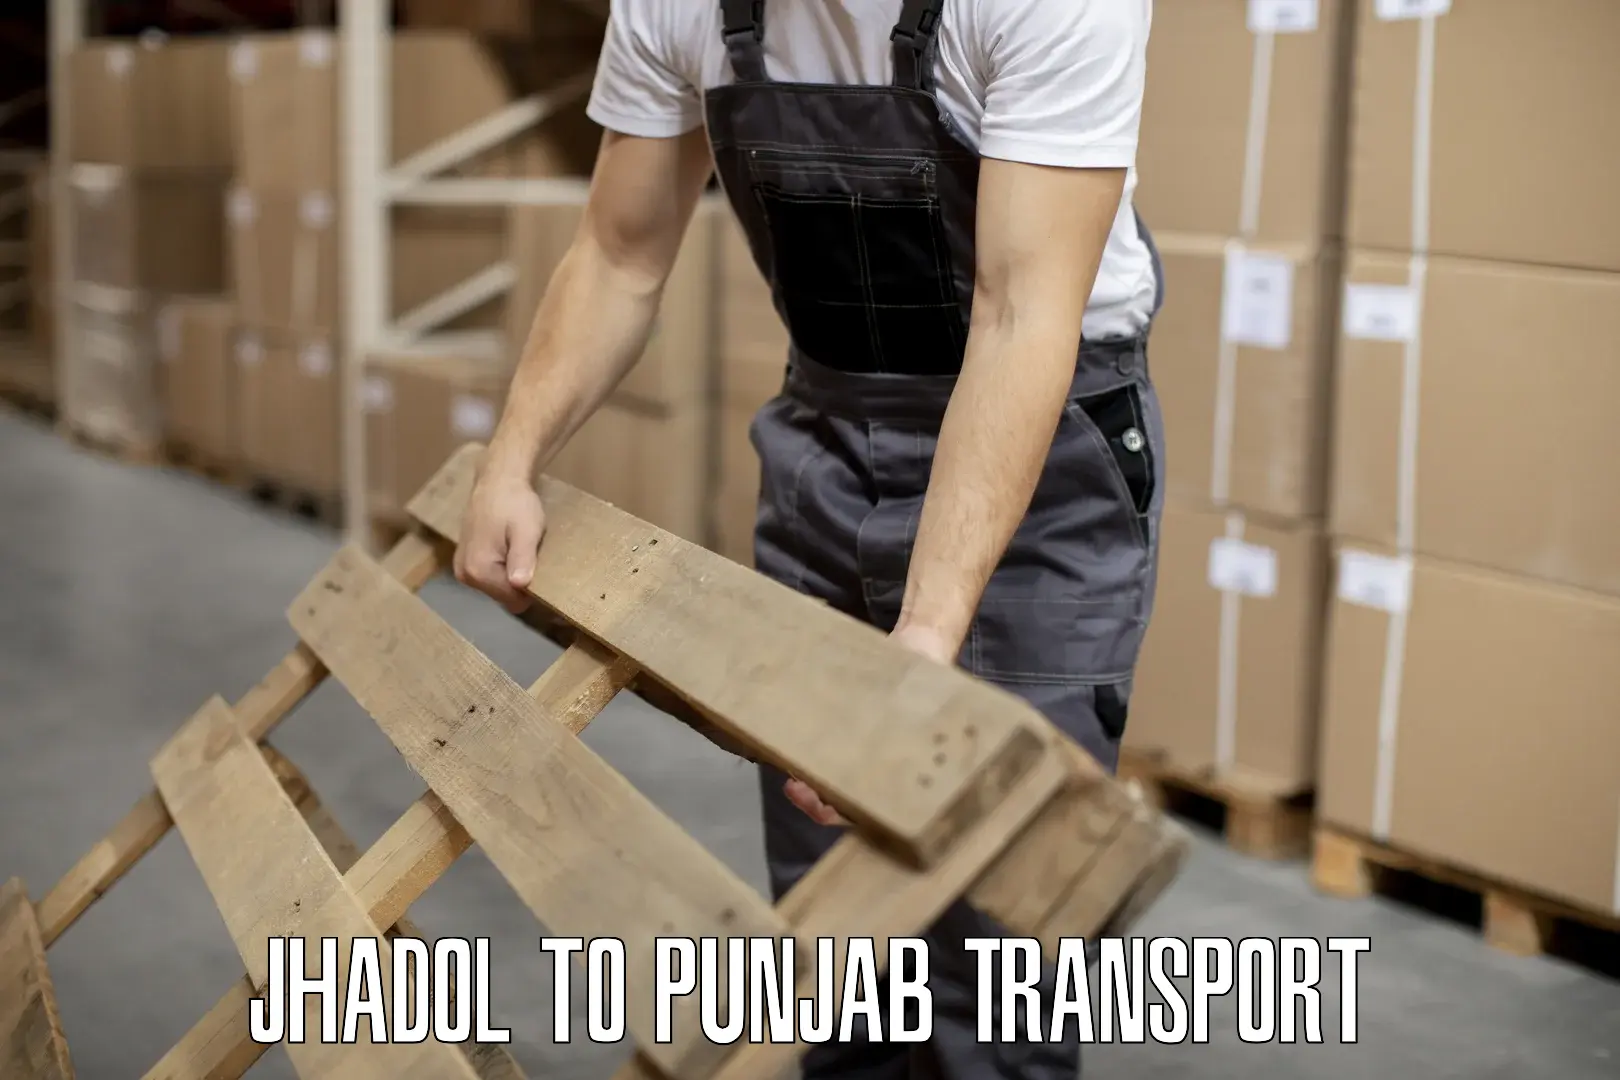 Daily transport service Jhadol to Punjab